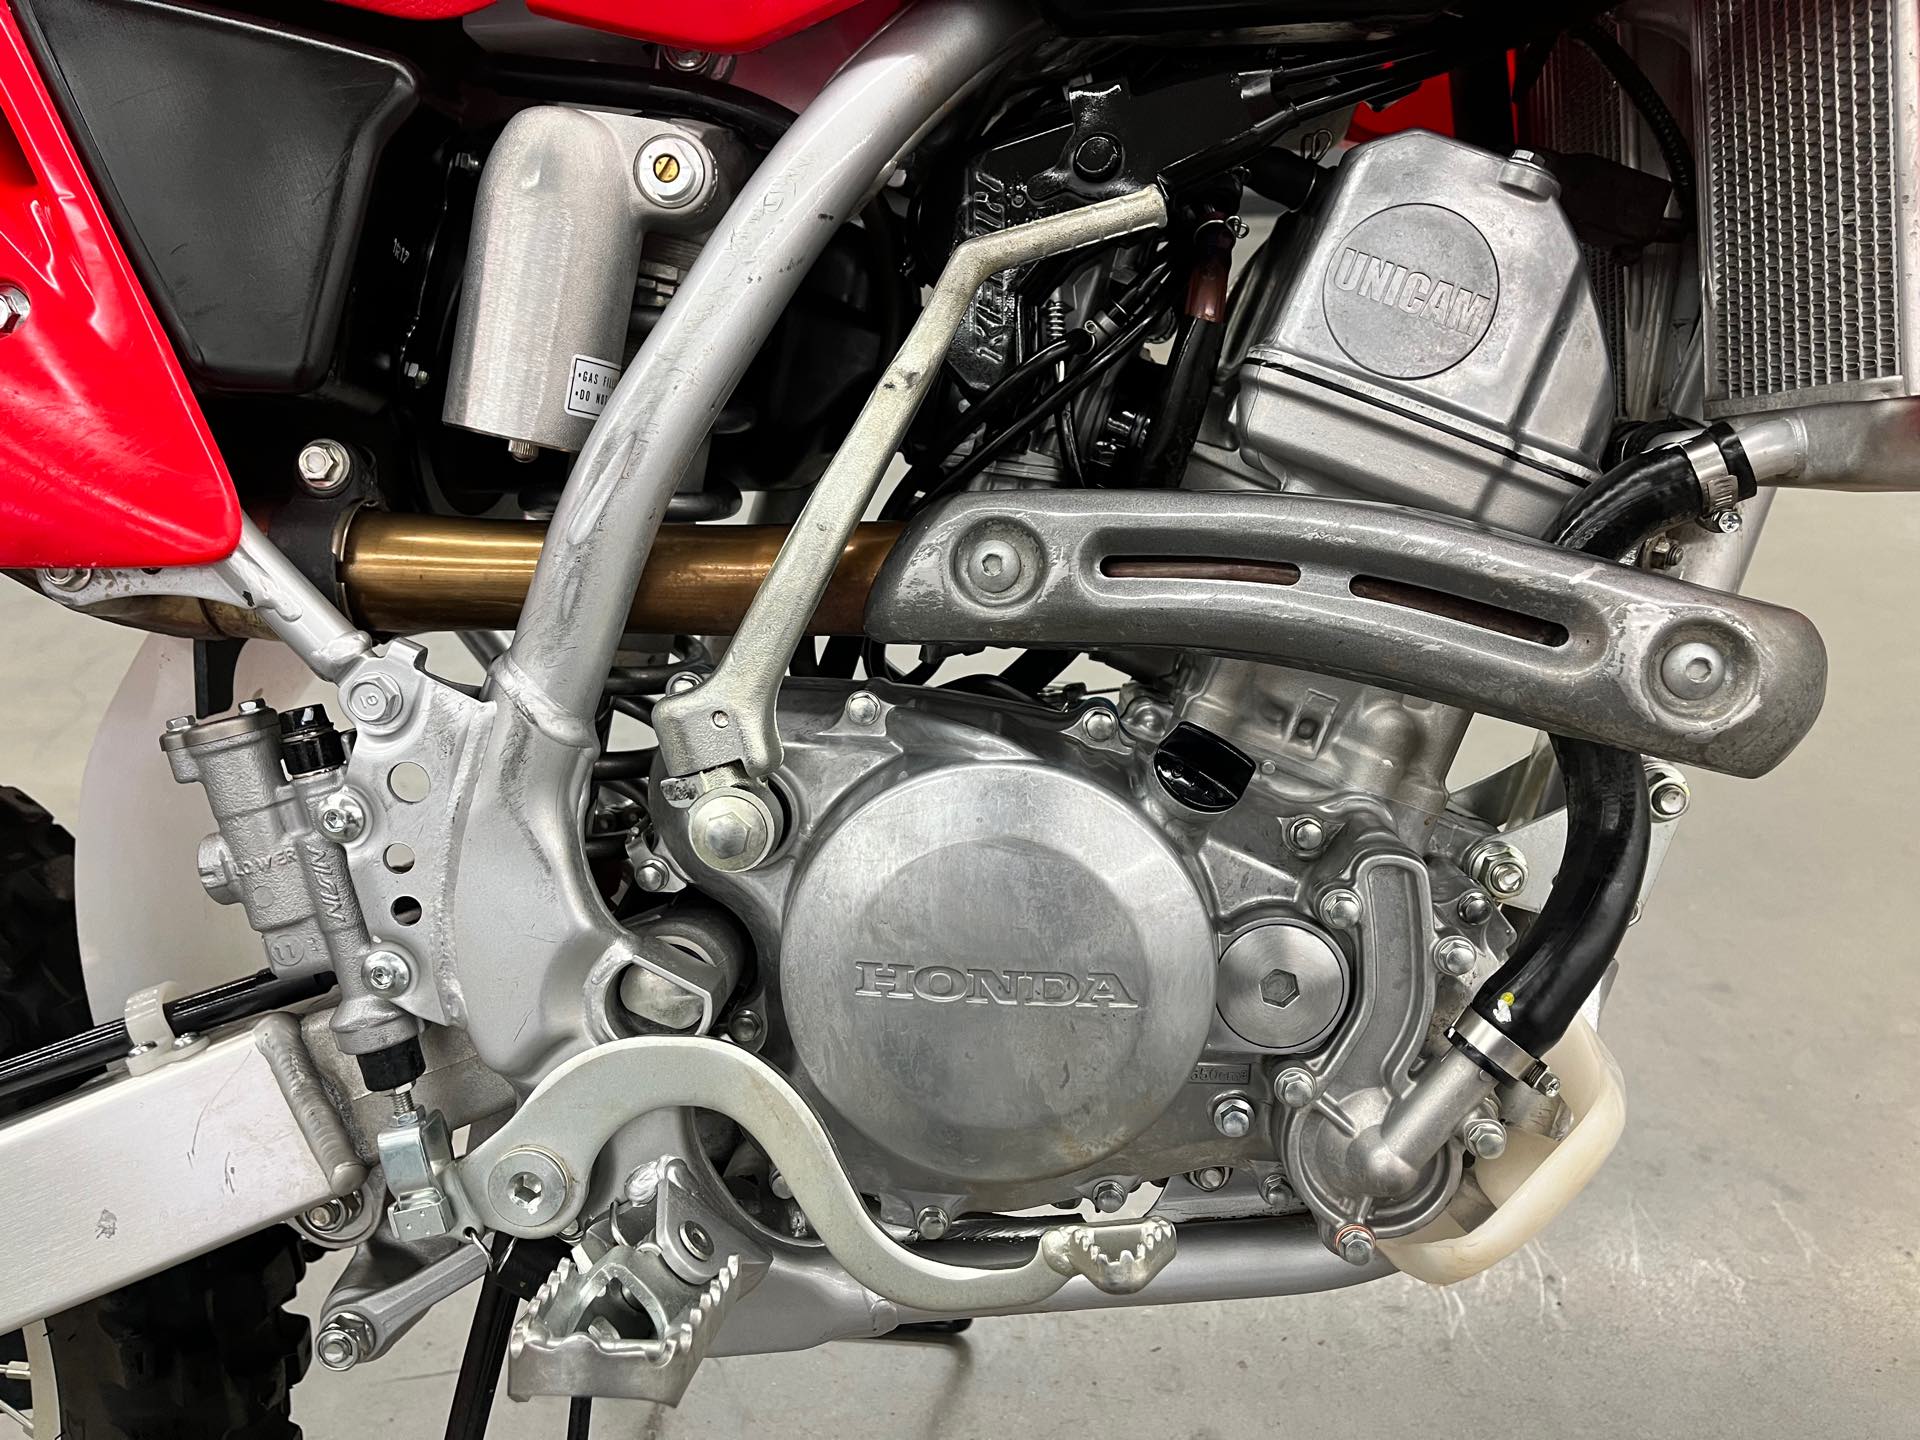 2022 Honda CRF 150R Expert at Aces Motorcycles - Denver